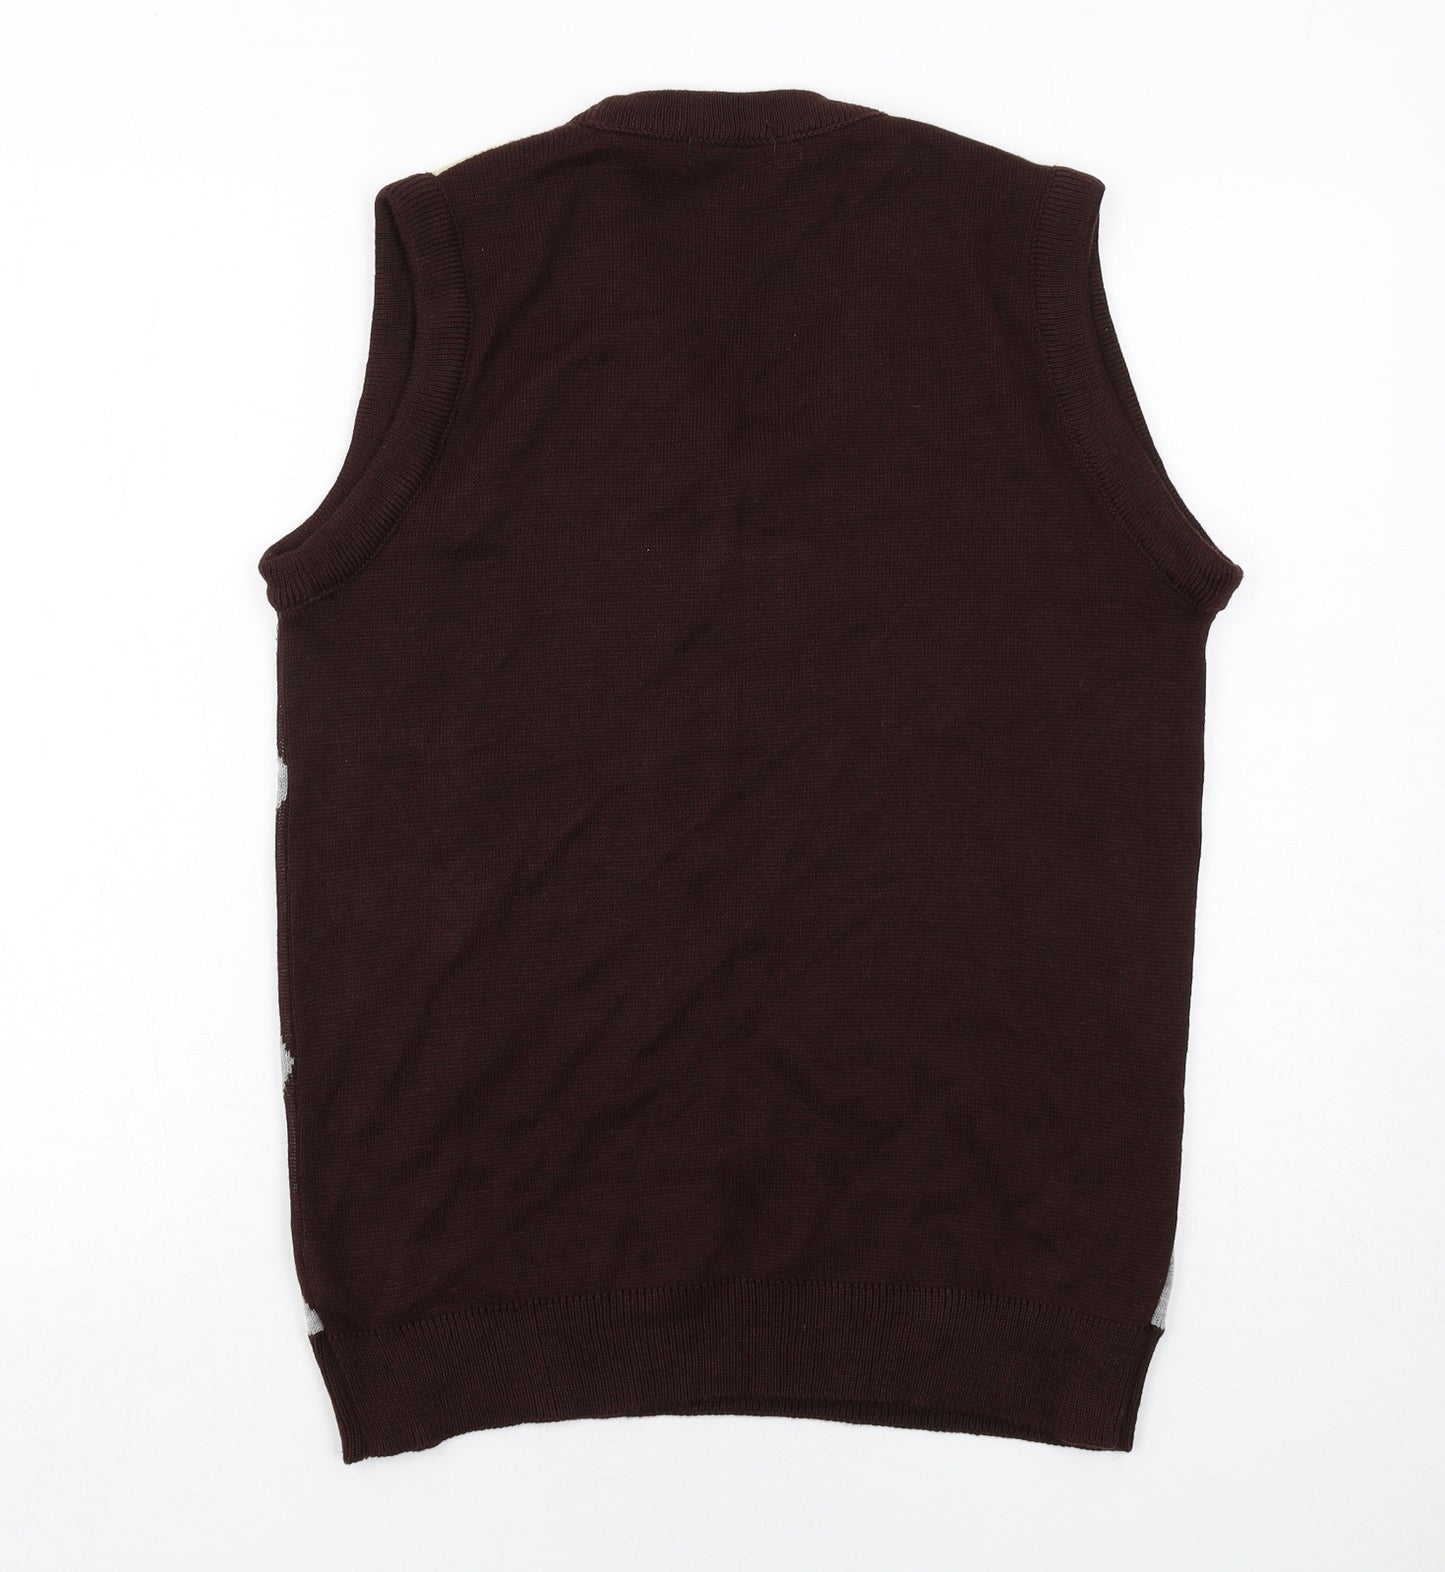 Generation Fashion Mens Brown V-Neck Argyle/Diamond Acrylic Vest Jumper Size M Sleeveless